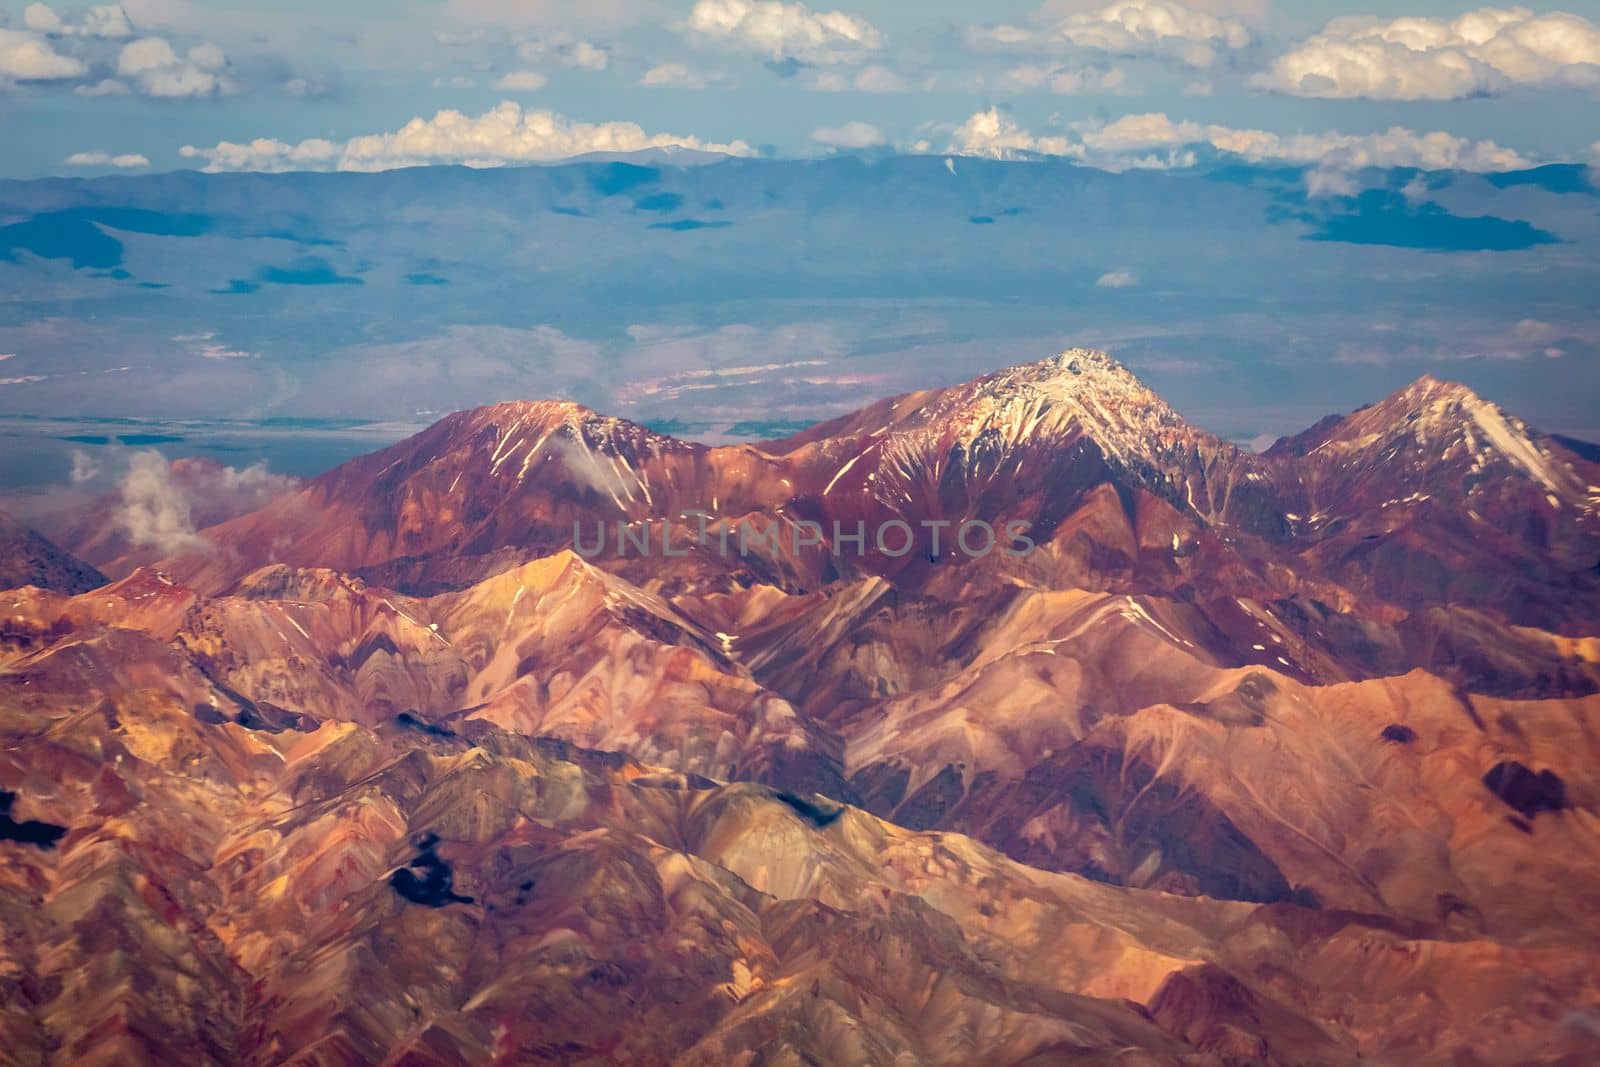 Atacama Desert dramatic volcanic landscape at Sunset, Northern Chile, South America